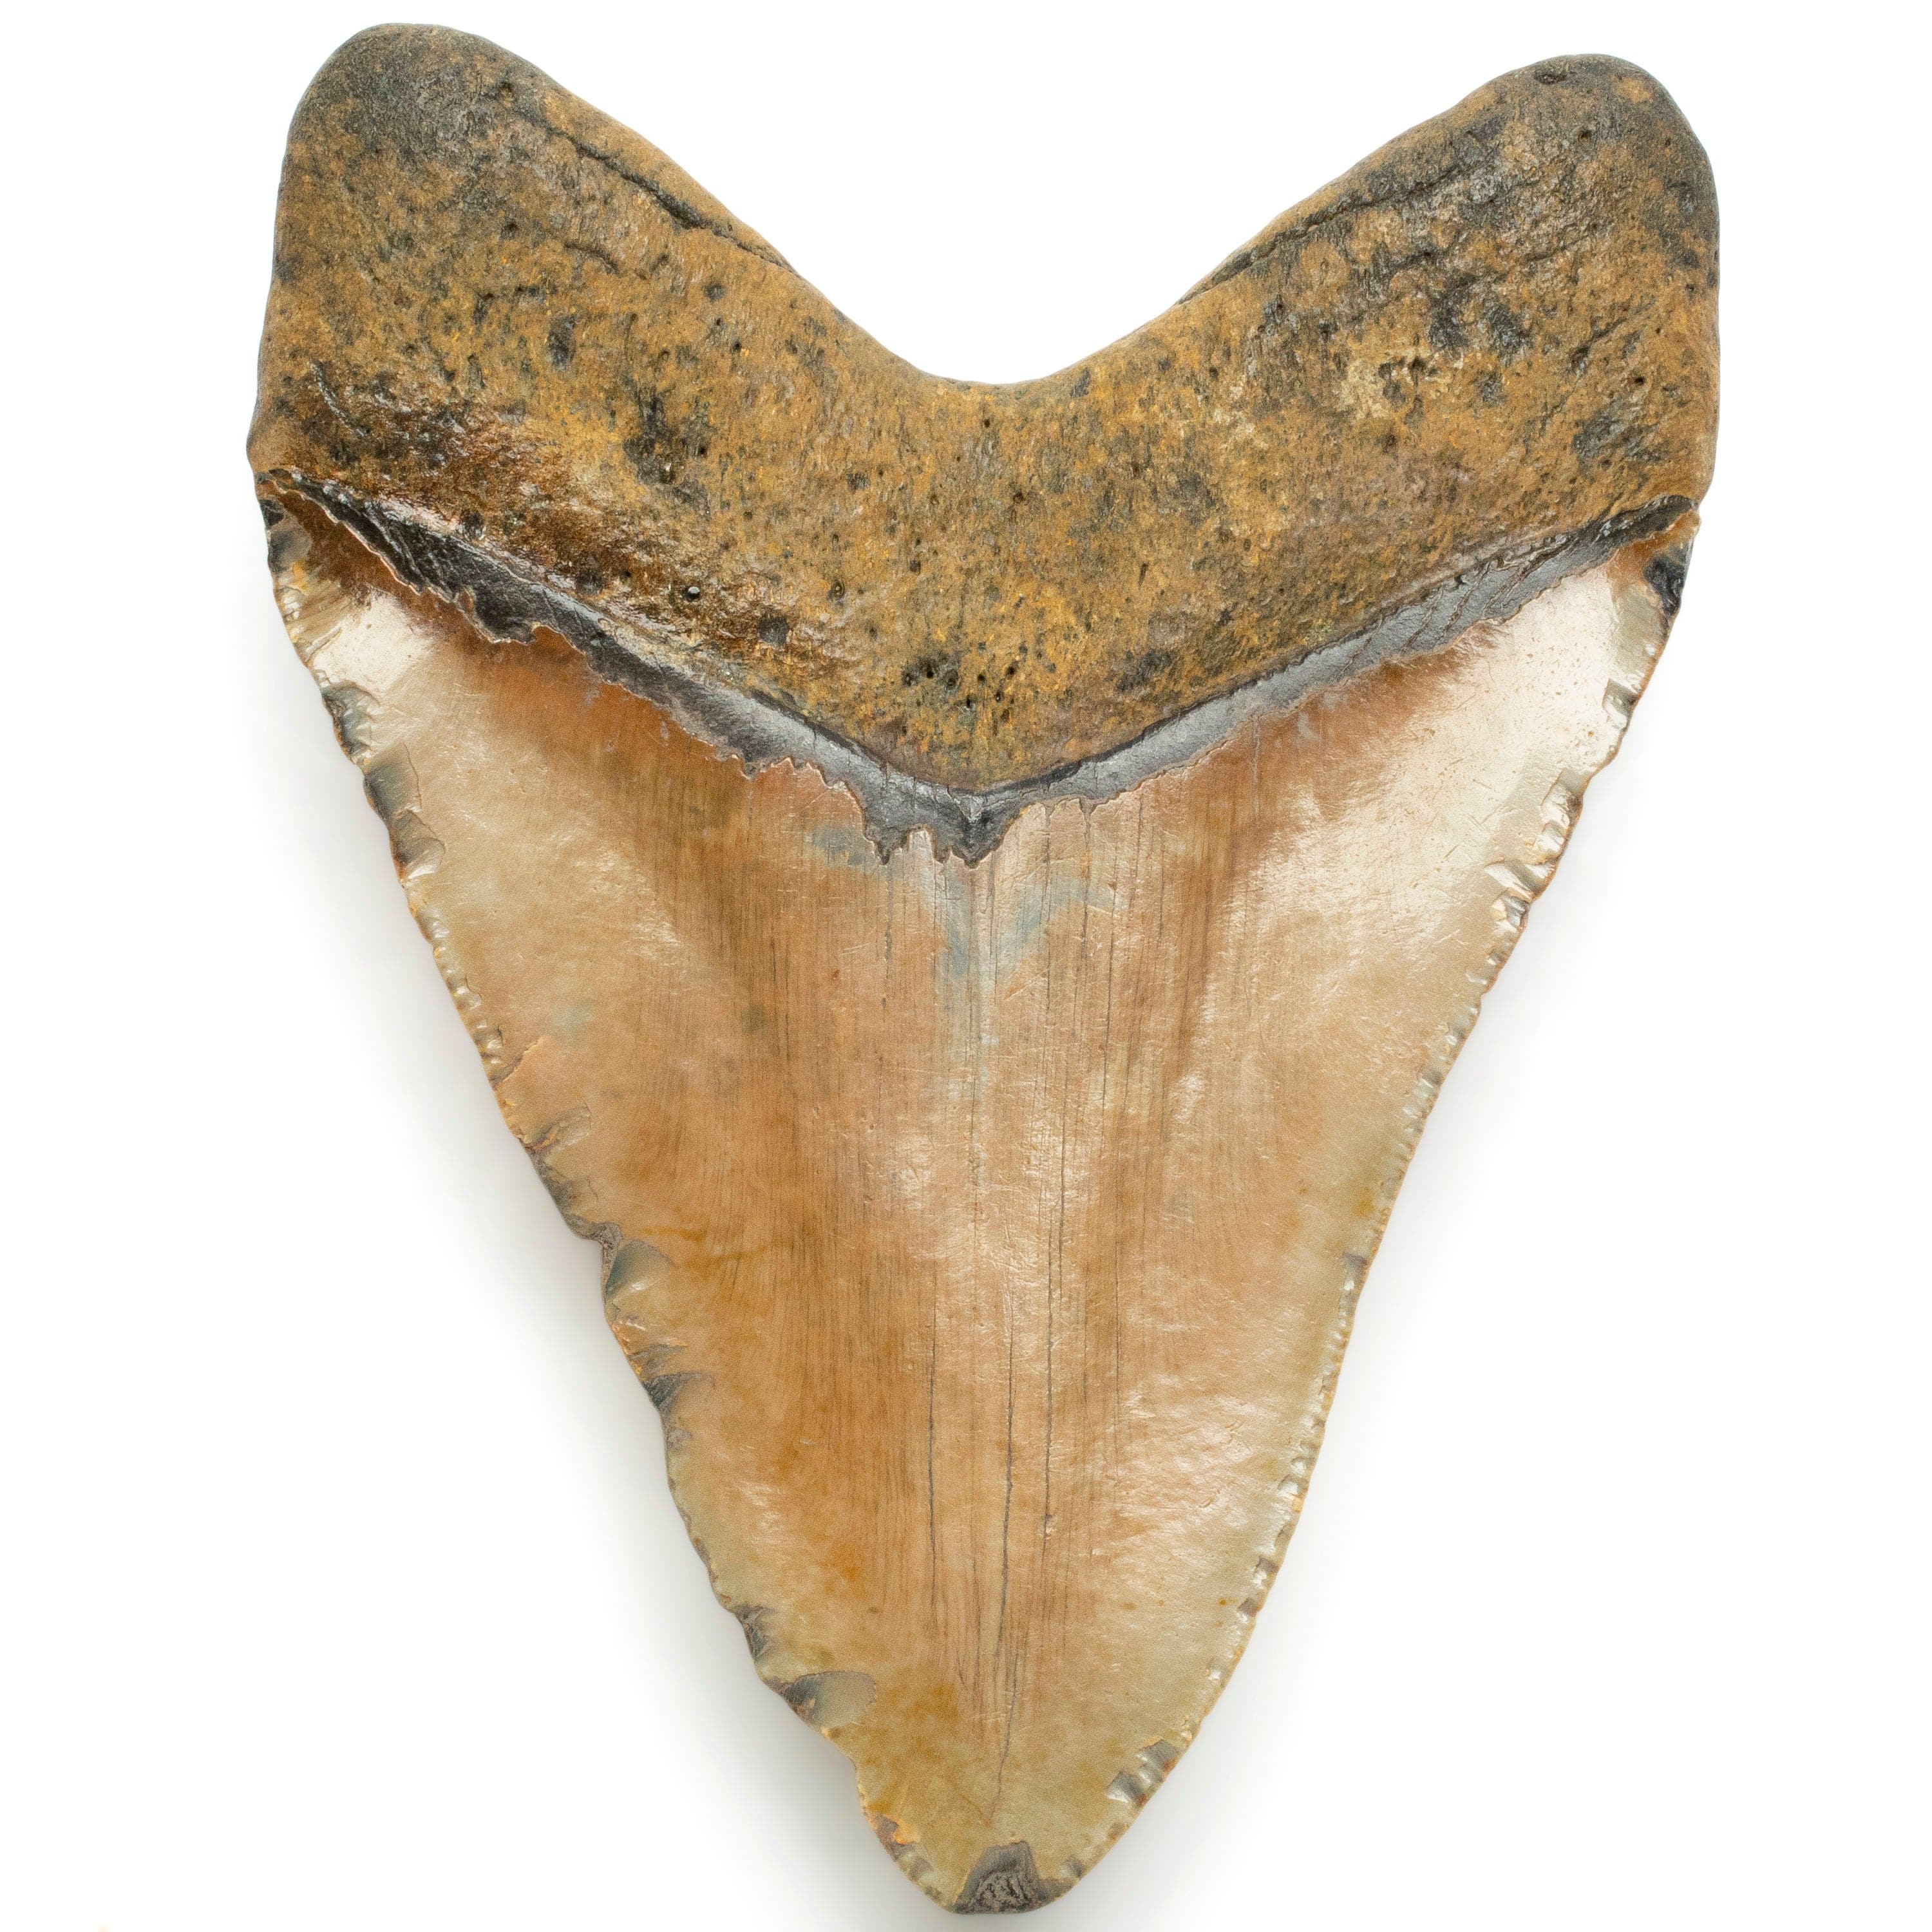 Kalifano Megalodon Teeth Megalodon Tooth from South Carolina - 5.6" ST1900.005